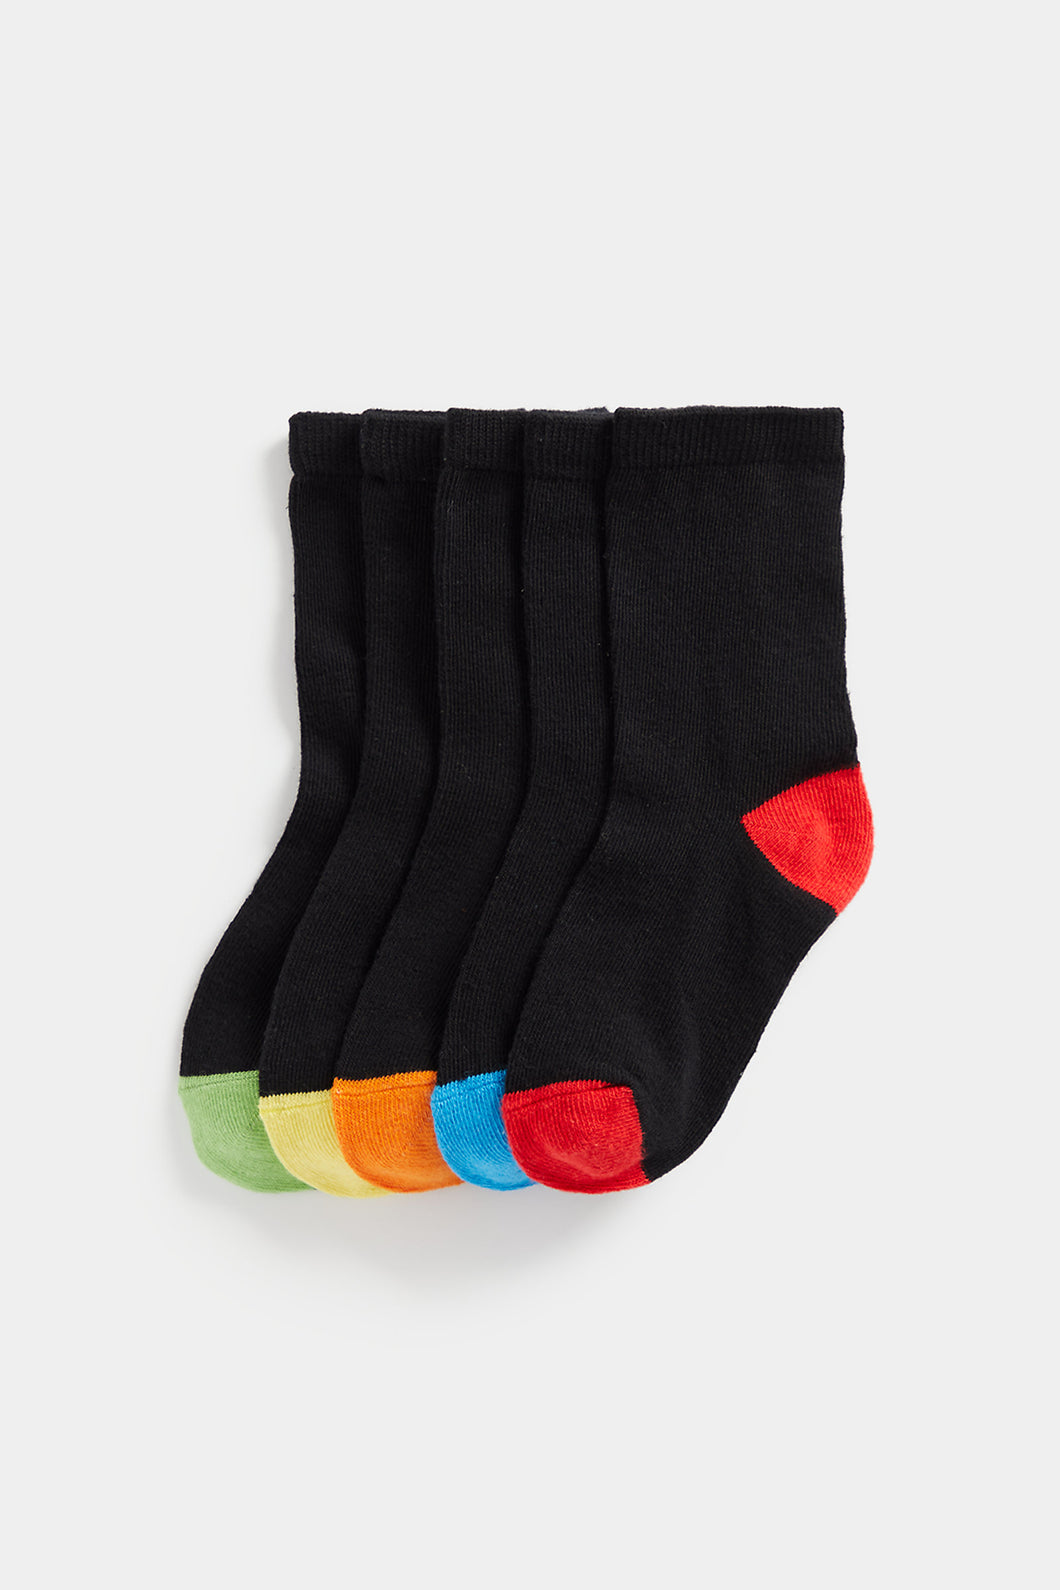 Mothercare Black Colour-Block Socks - 5 Pack